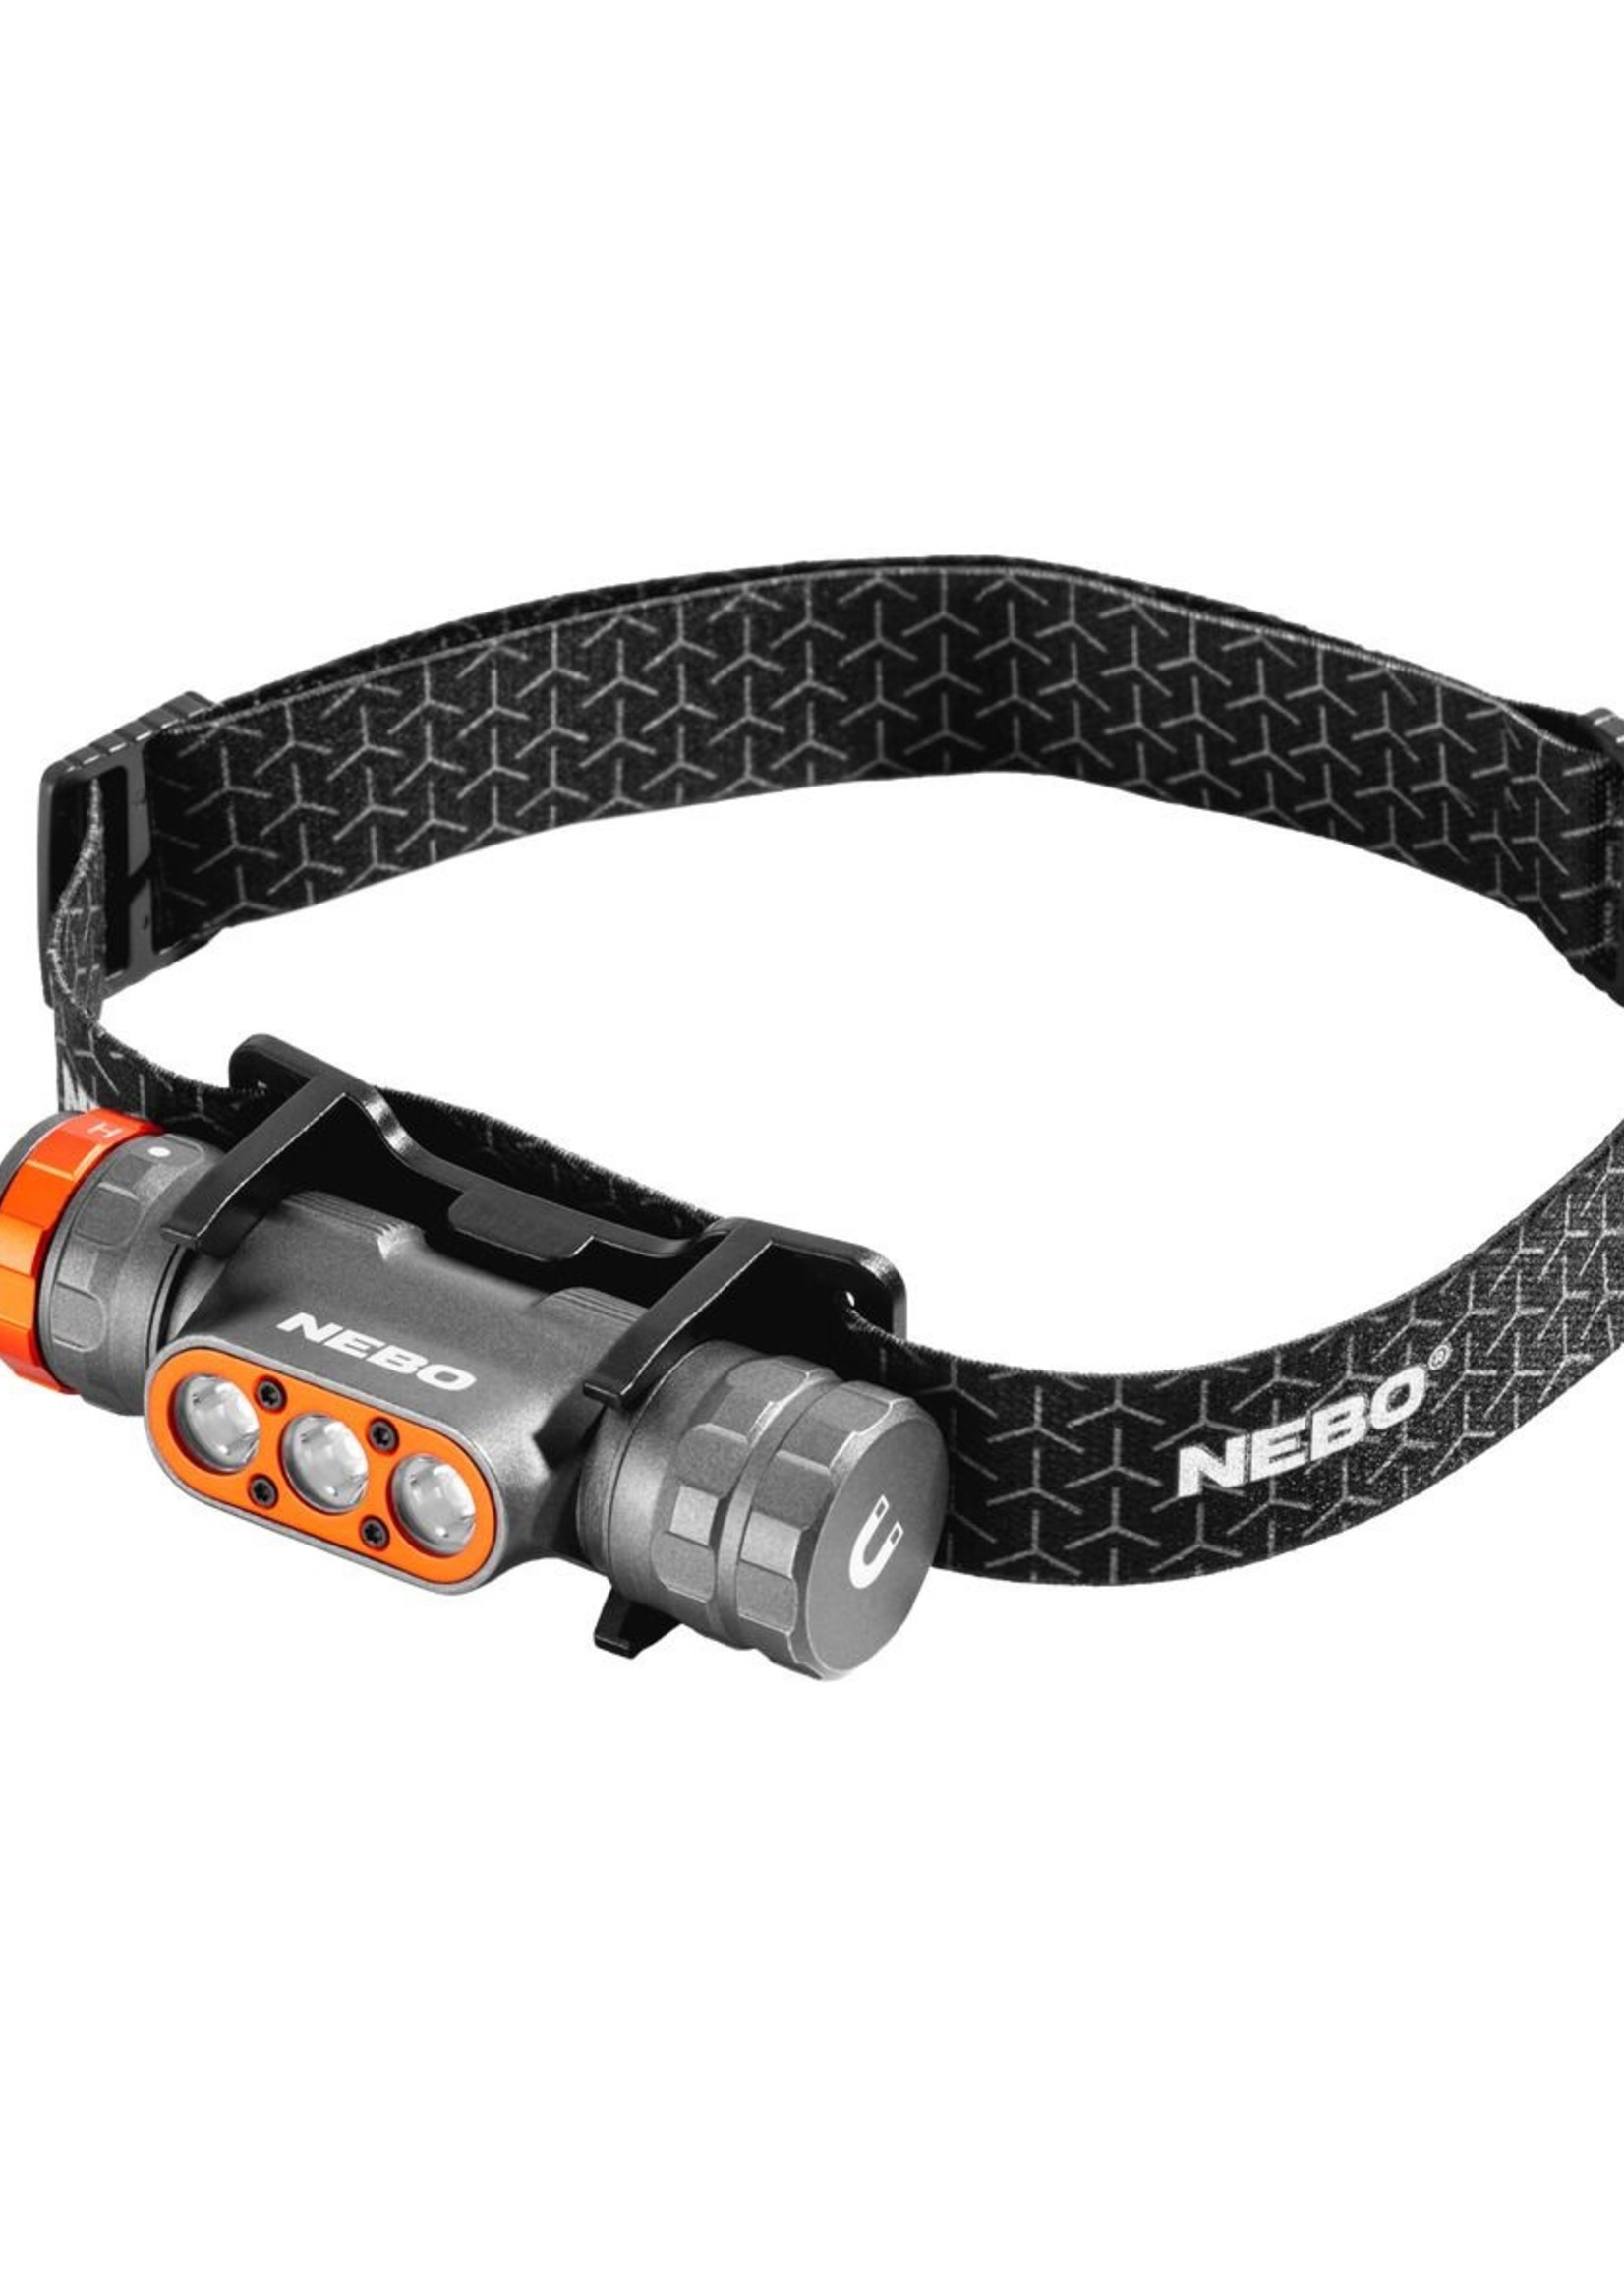 Accessories NEBO Transcend 1500 Lumen USB Rechargeable Headlamp